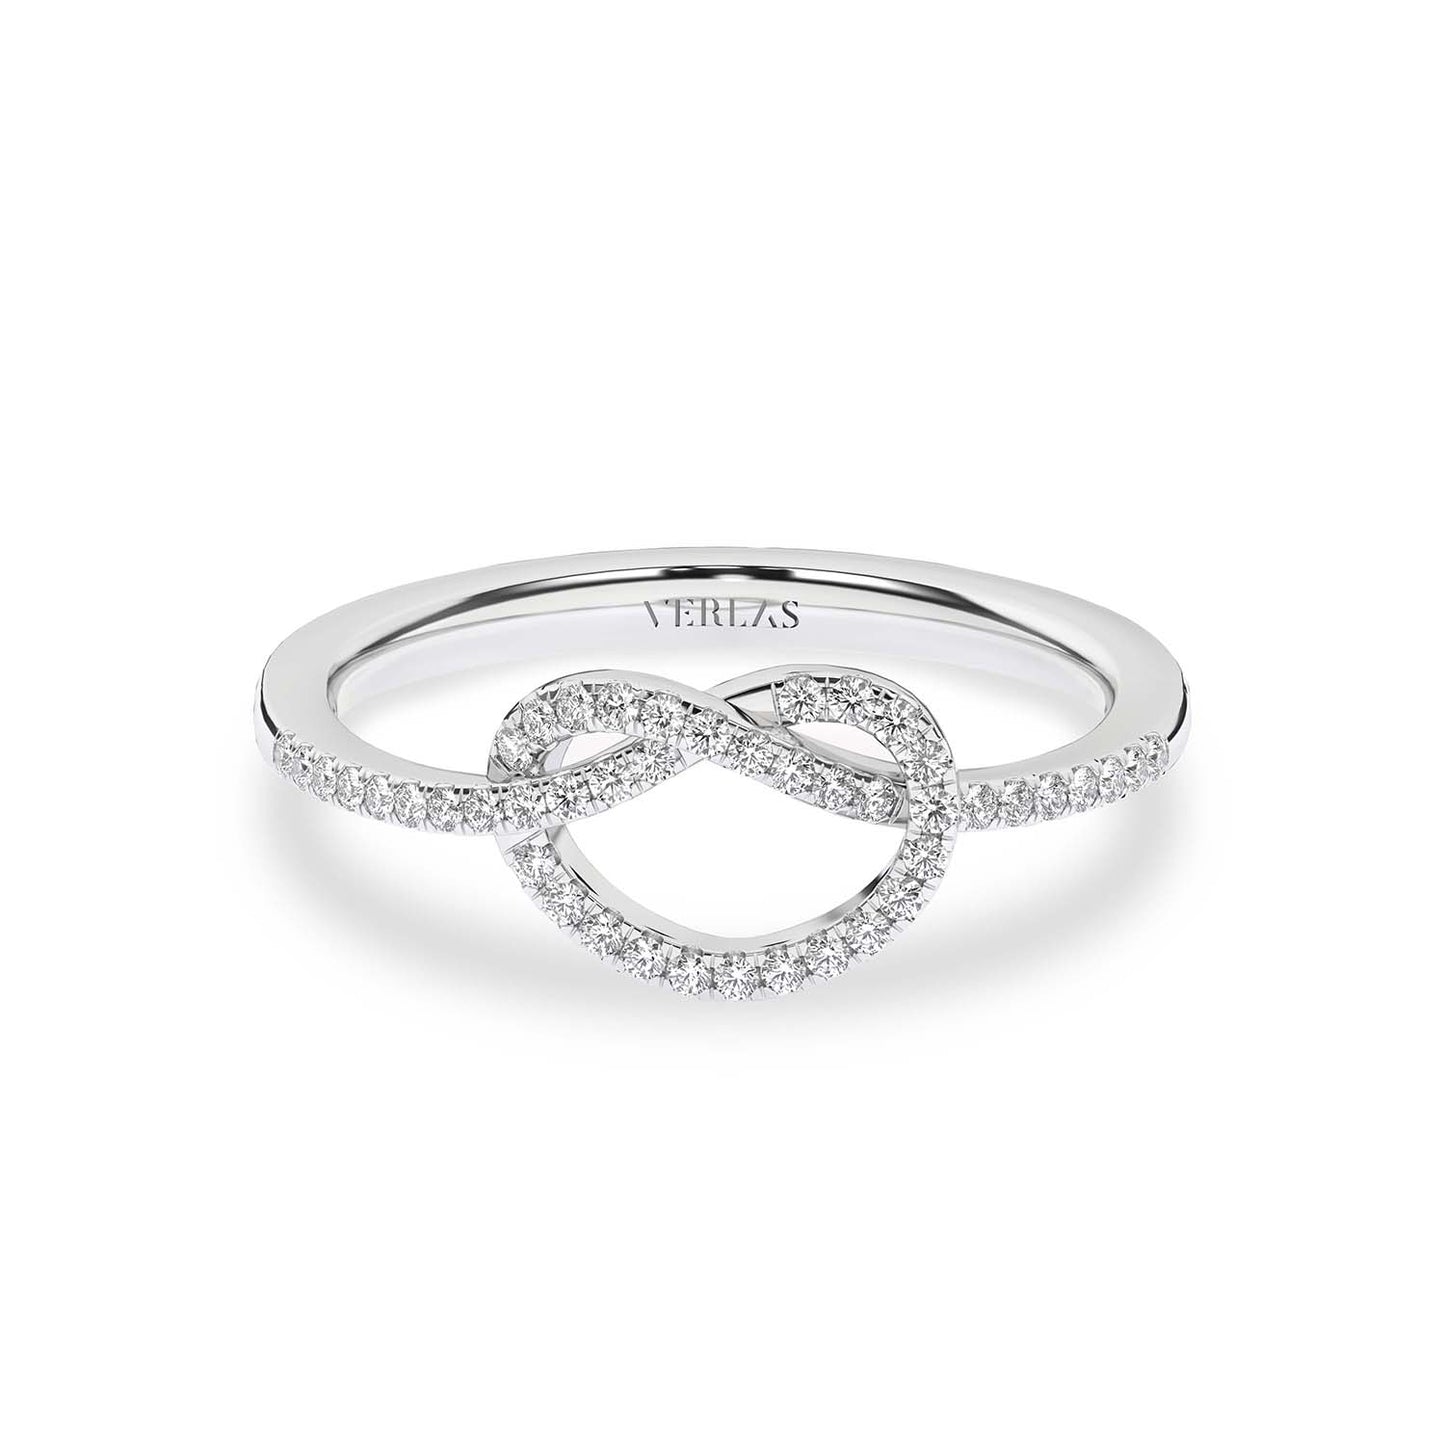 Infinity Heart Ring